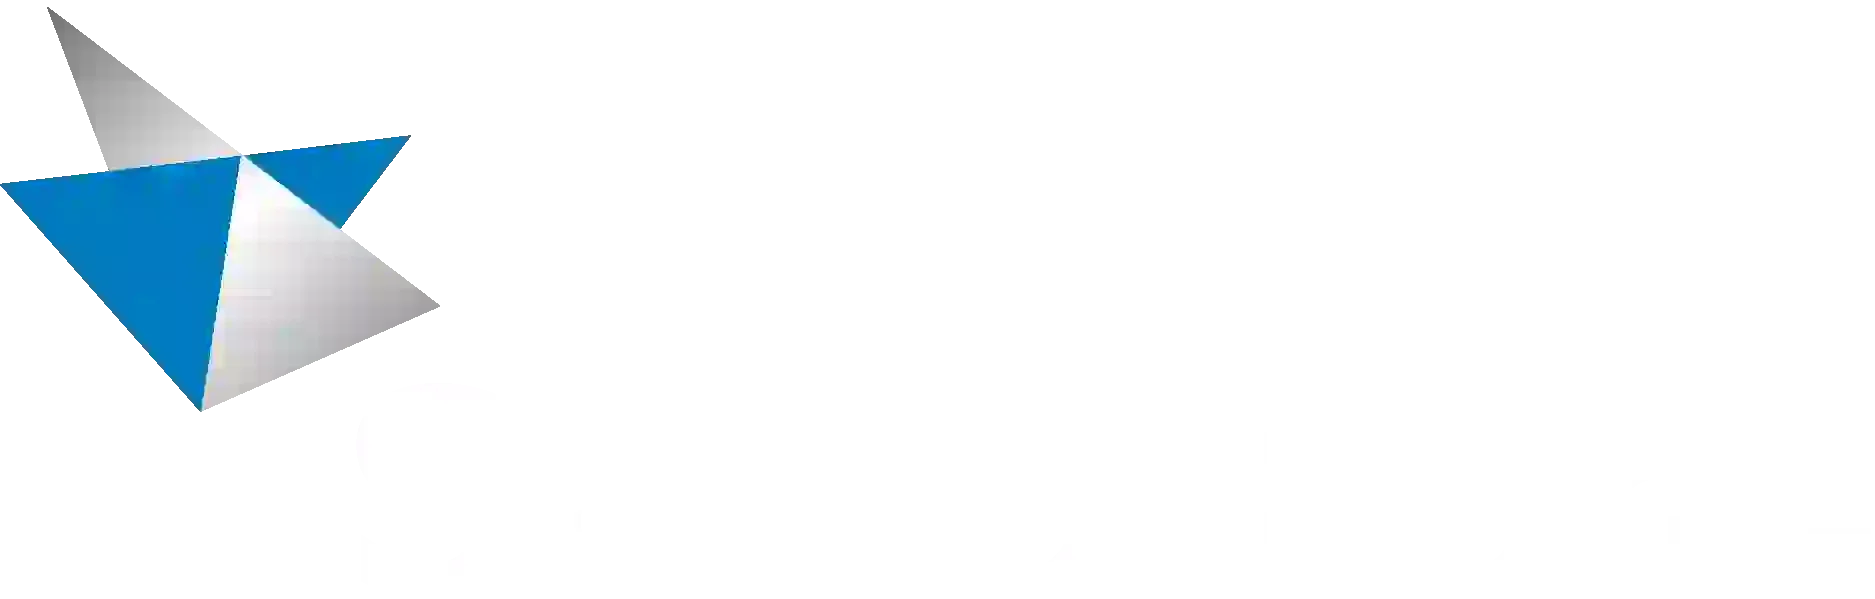 Solid edge logo vector.svg 